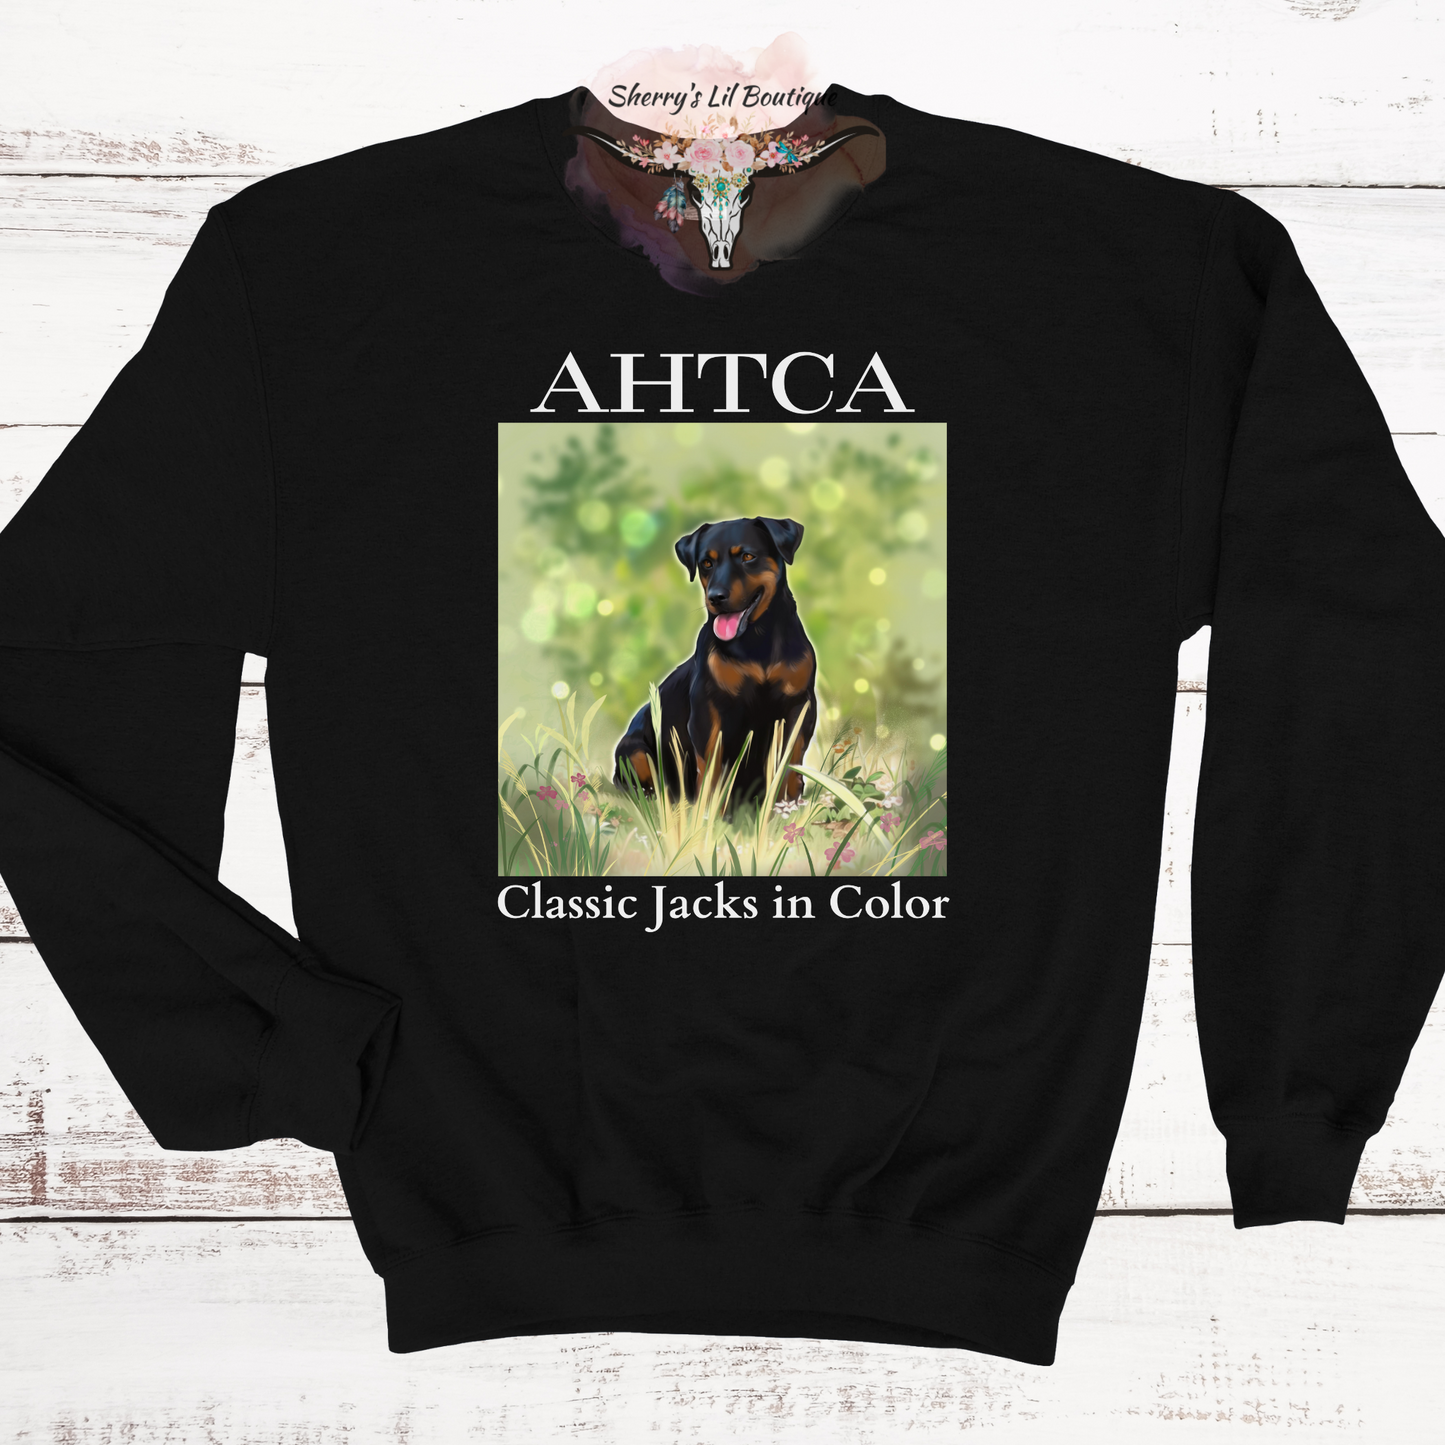 Black Sweatshirt with AHTCA graphic design